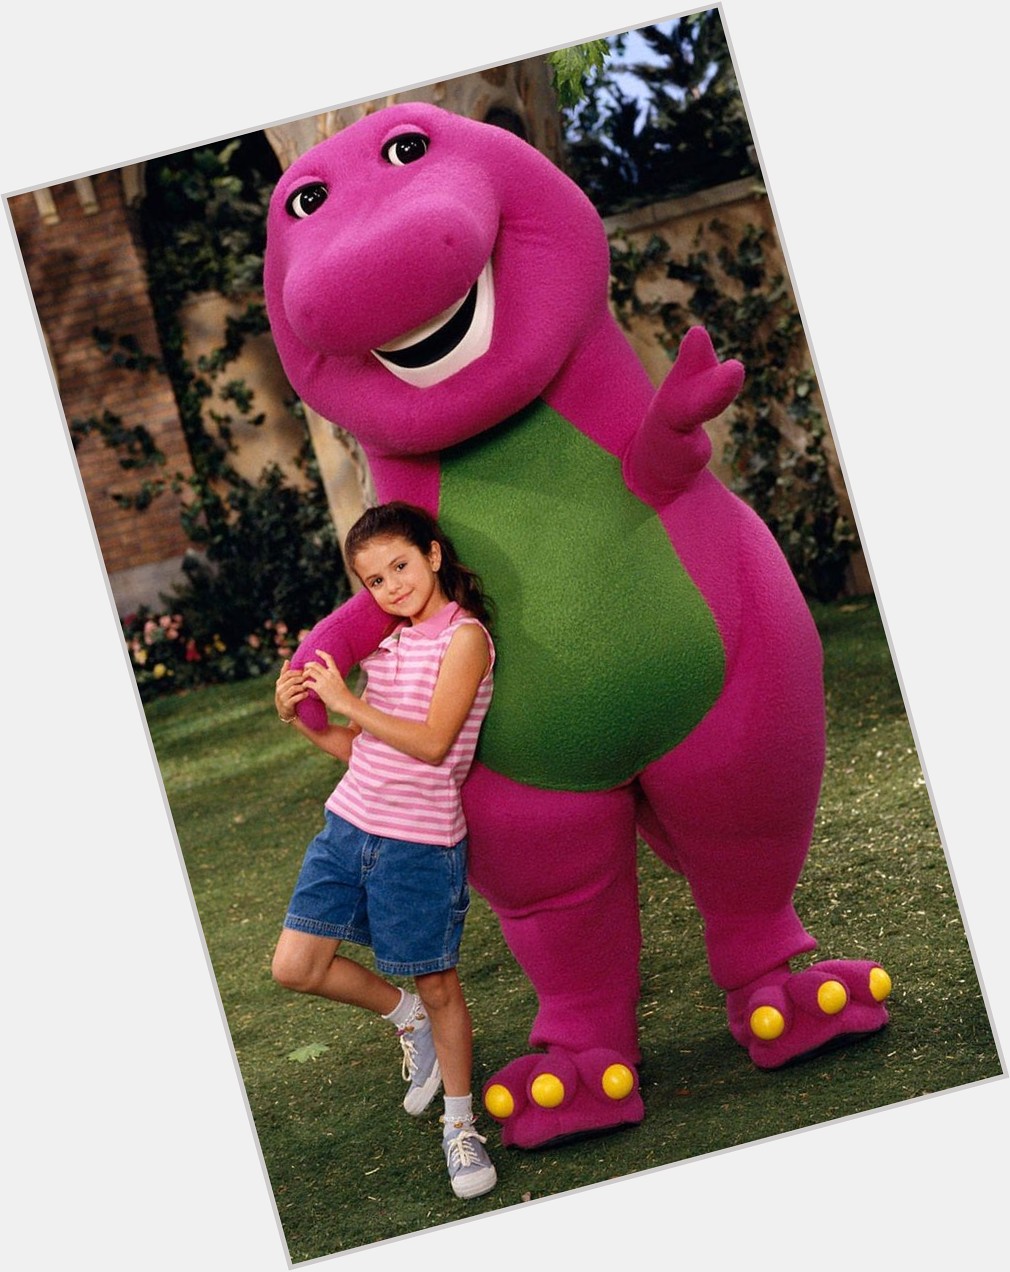 Selena Gomez x Barney & Friends

HAPPY BIRTHDAY SELENA + 